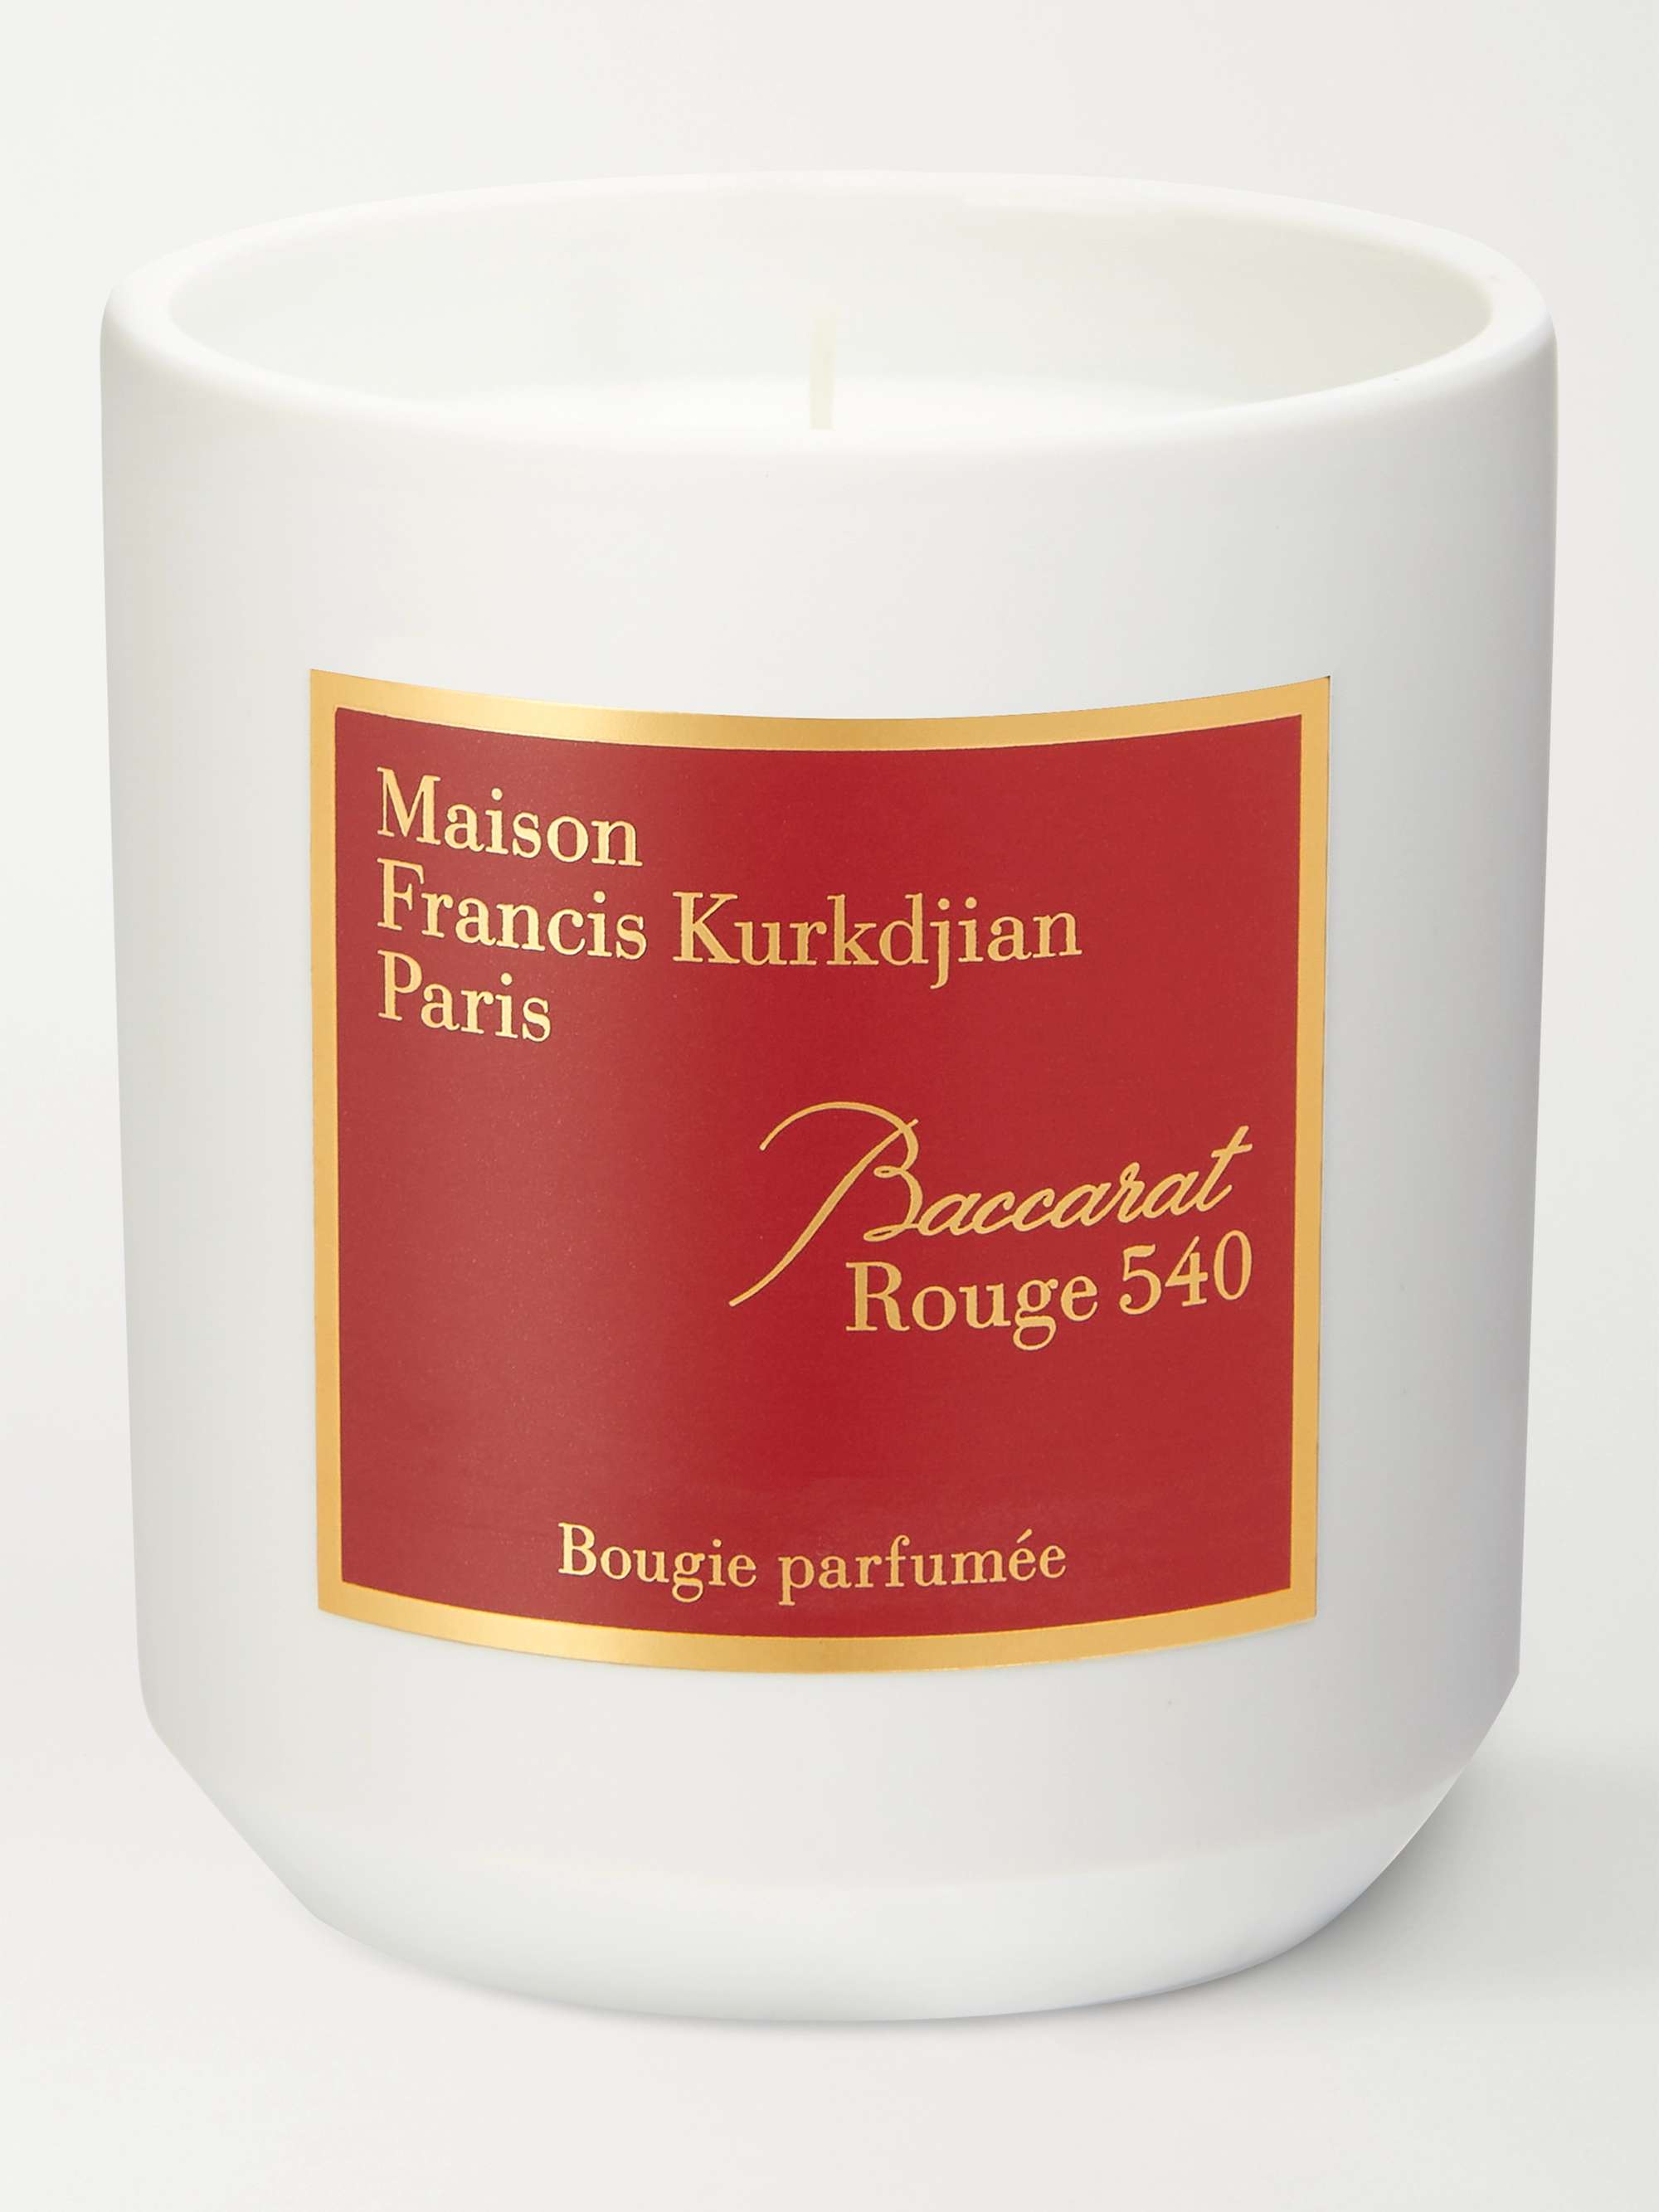 MAISON FRANCIS KURKDJIAN Baccarat Rouge 540 Scented Candle, 280g